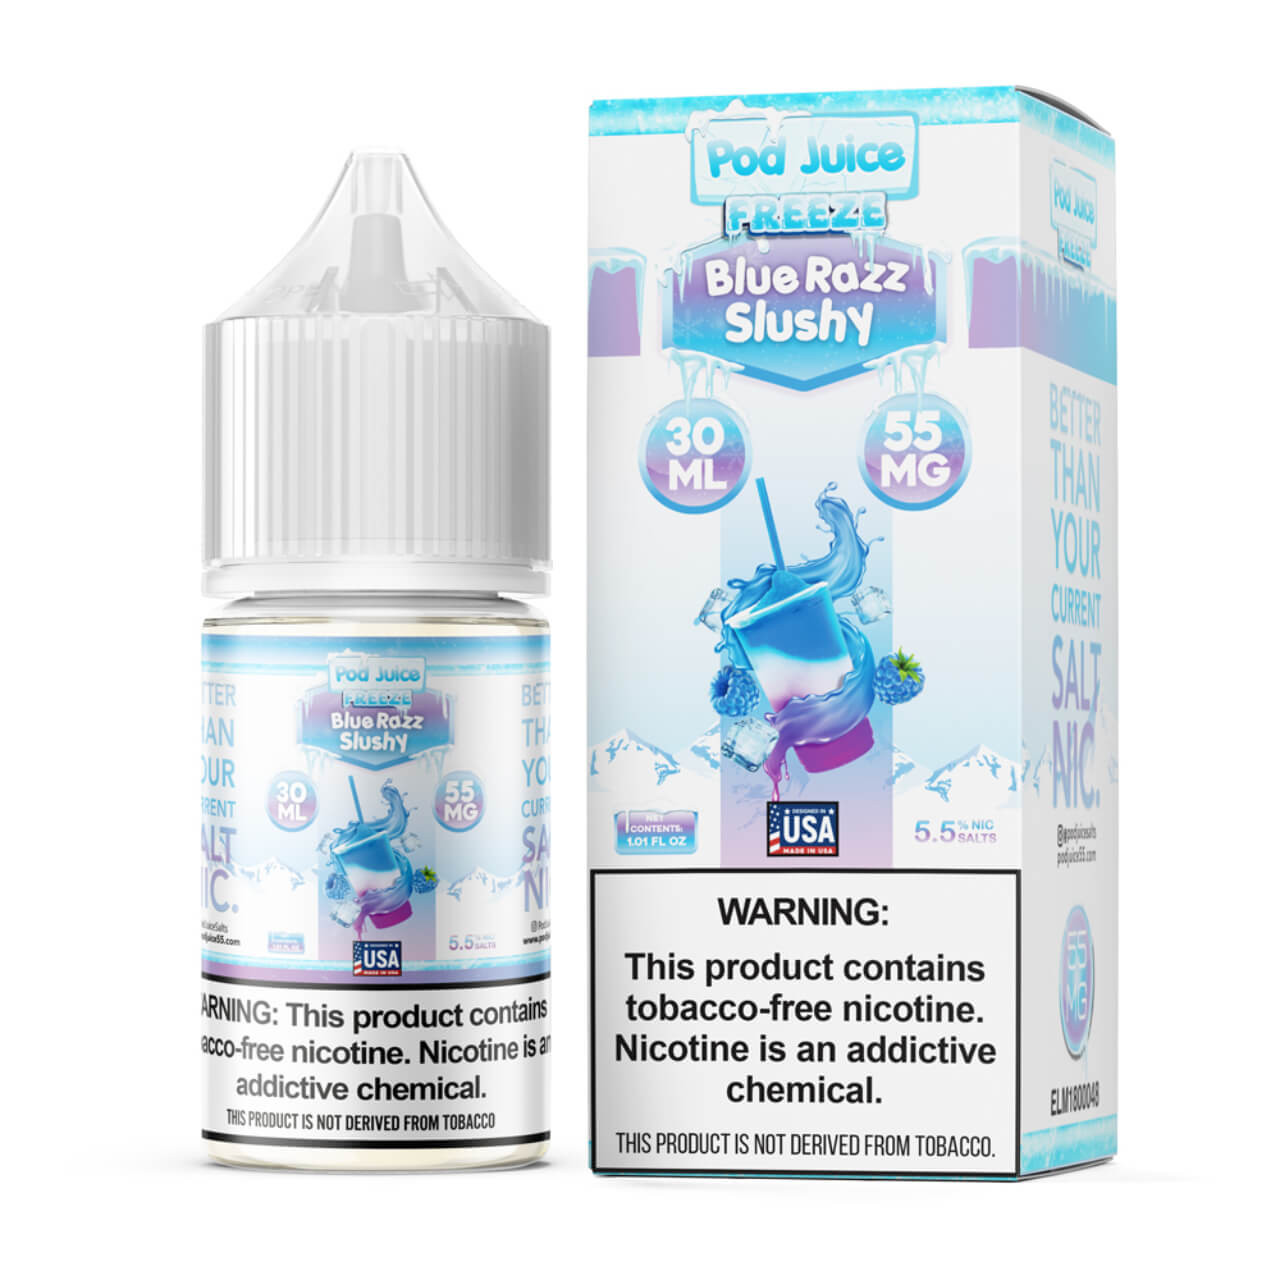 Blue Raspberry Nic Salt by Ice Blox, E-Liquid